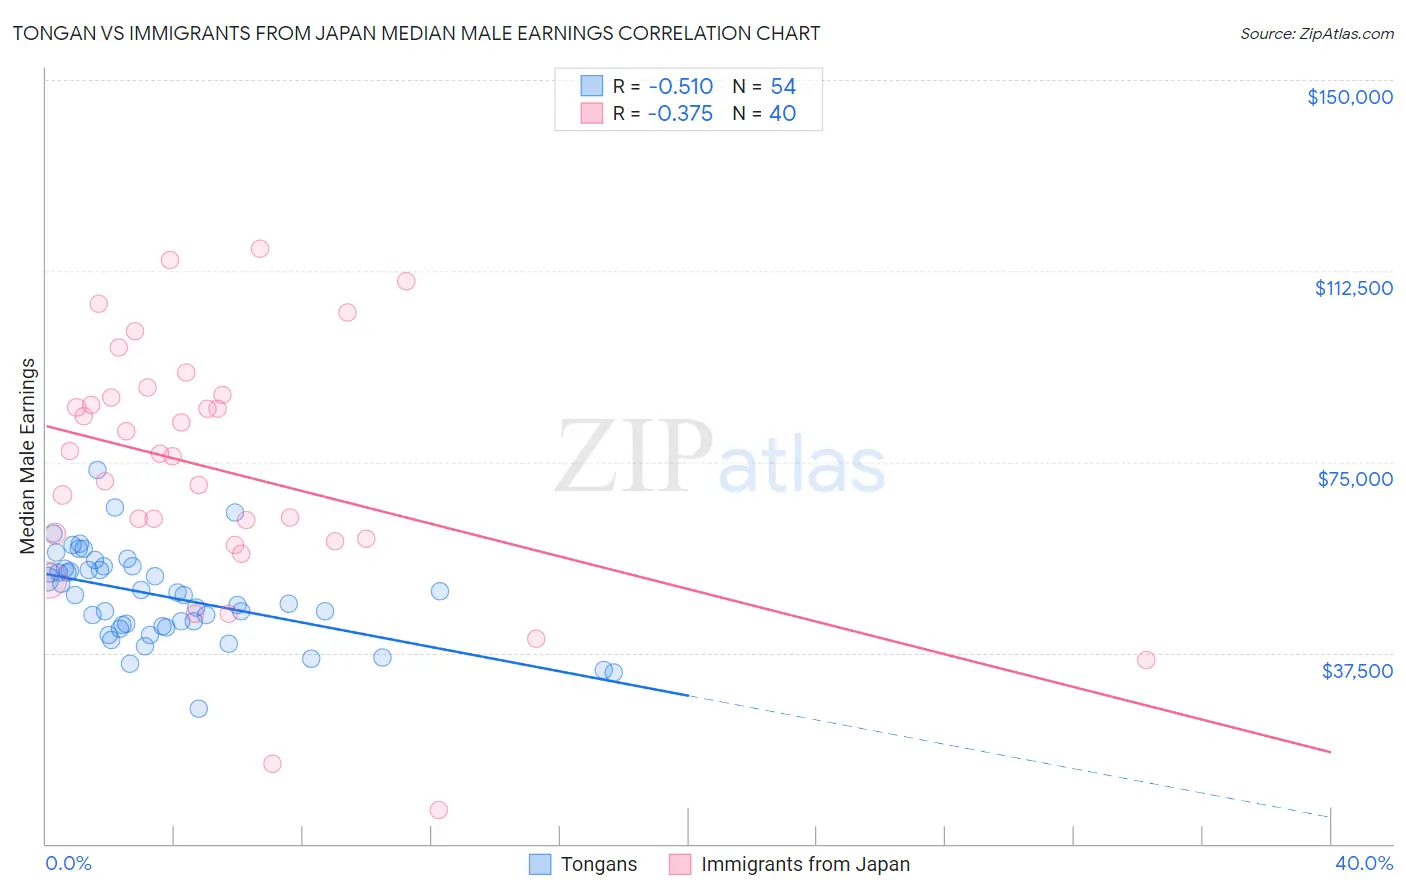 Tongan vs Immigrants from Japan Median Male Earnings